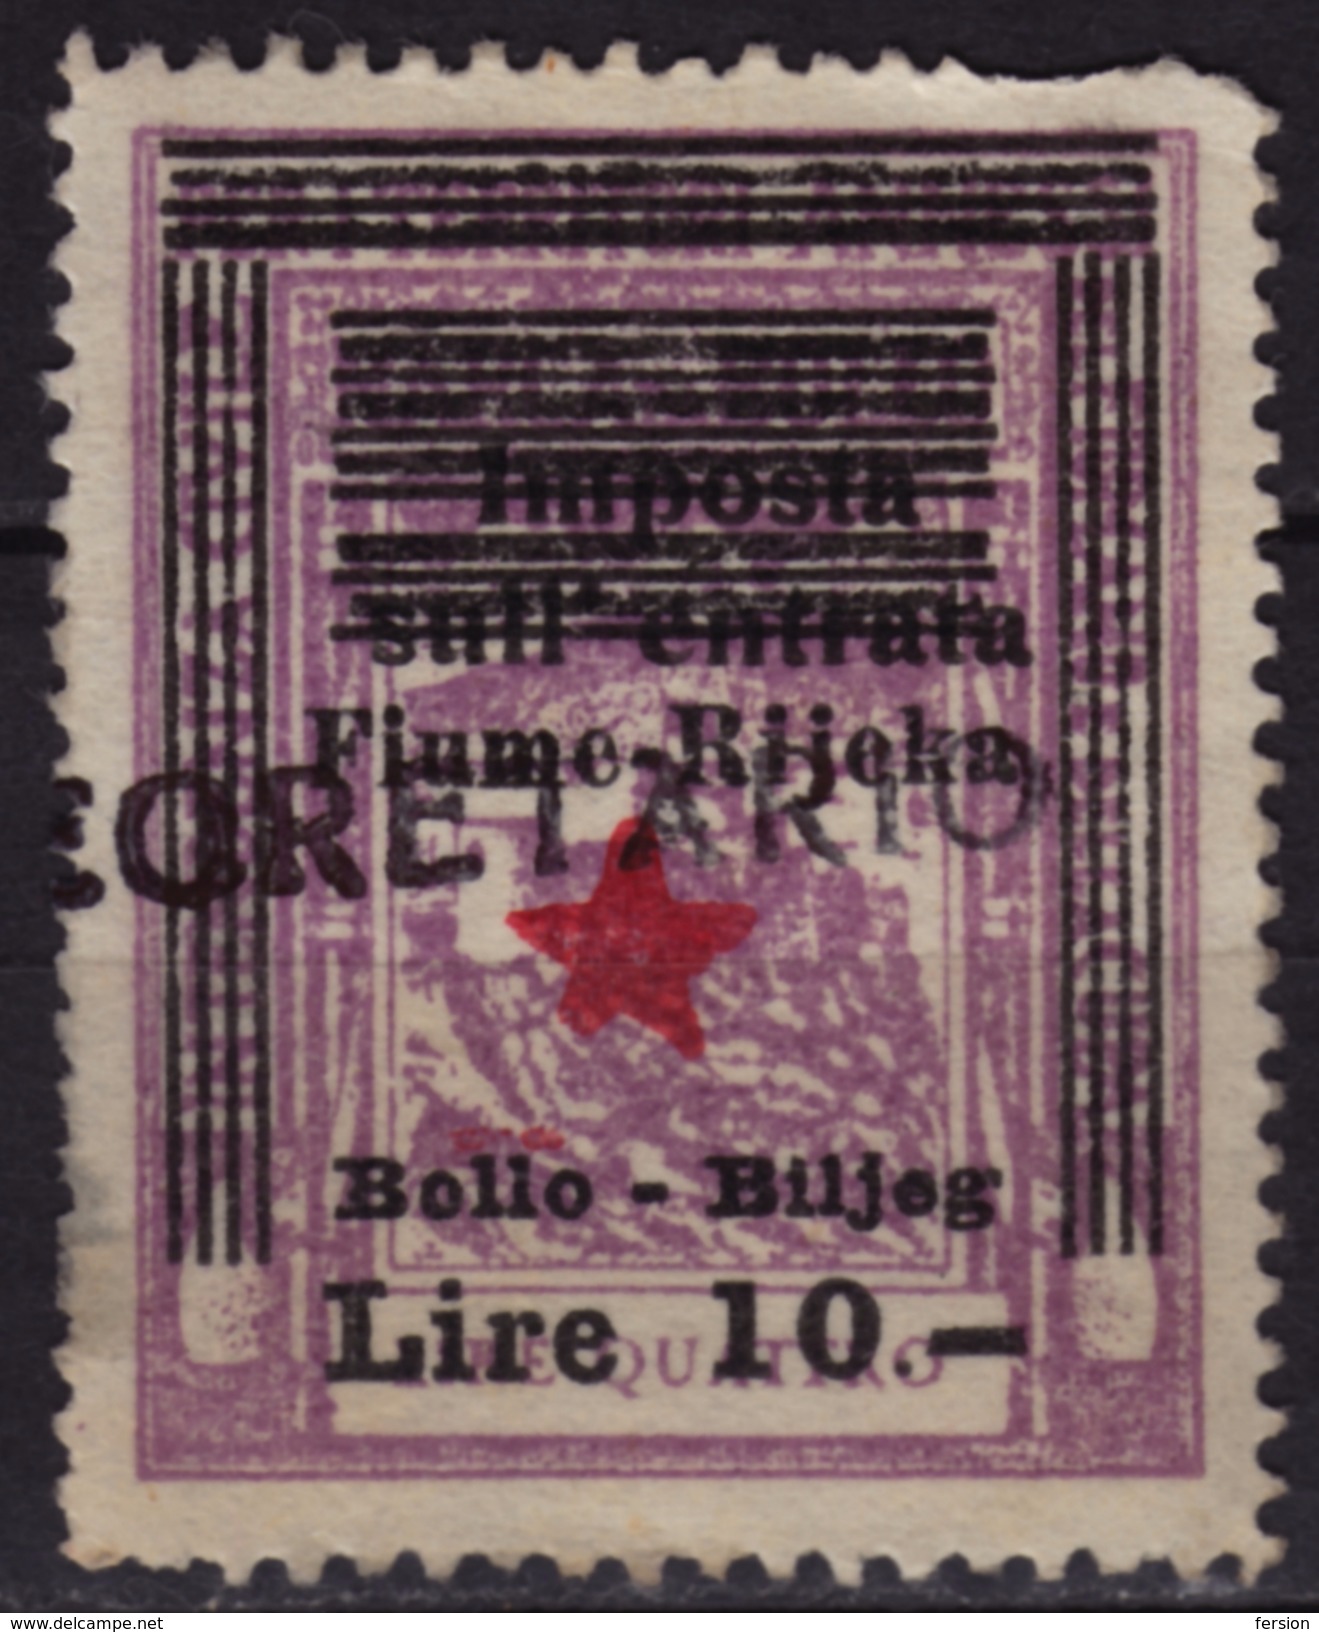 1945 - Istria Istra / Rijeka Fiume - Yugoslavia Occupation - Revenue Tax Stamp - Overprint - Joegoslavische Bez.: Istrië